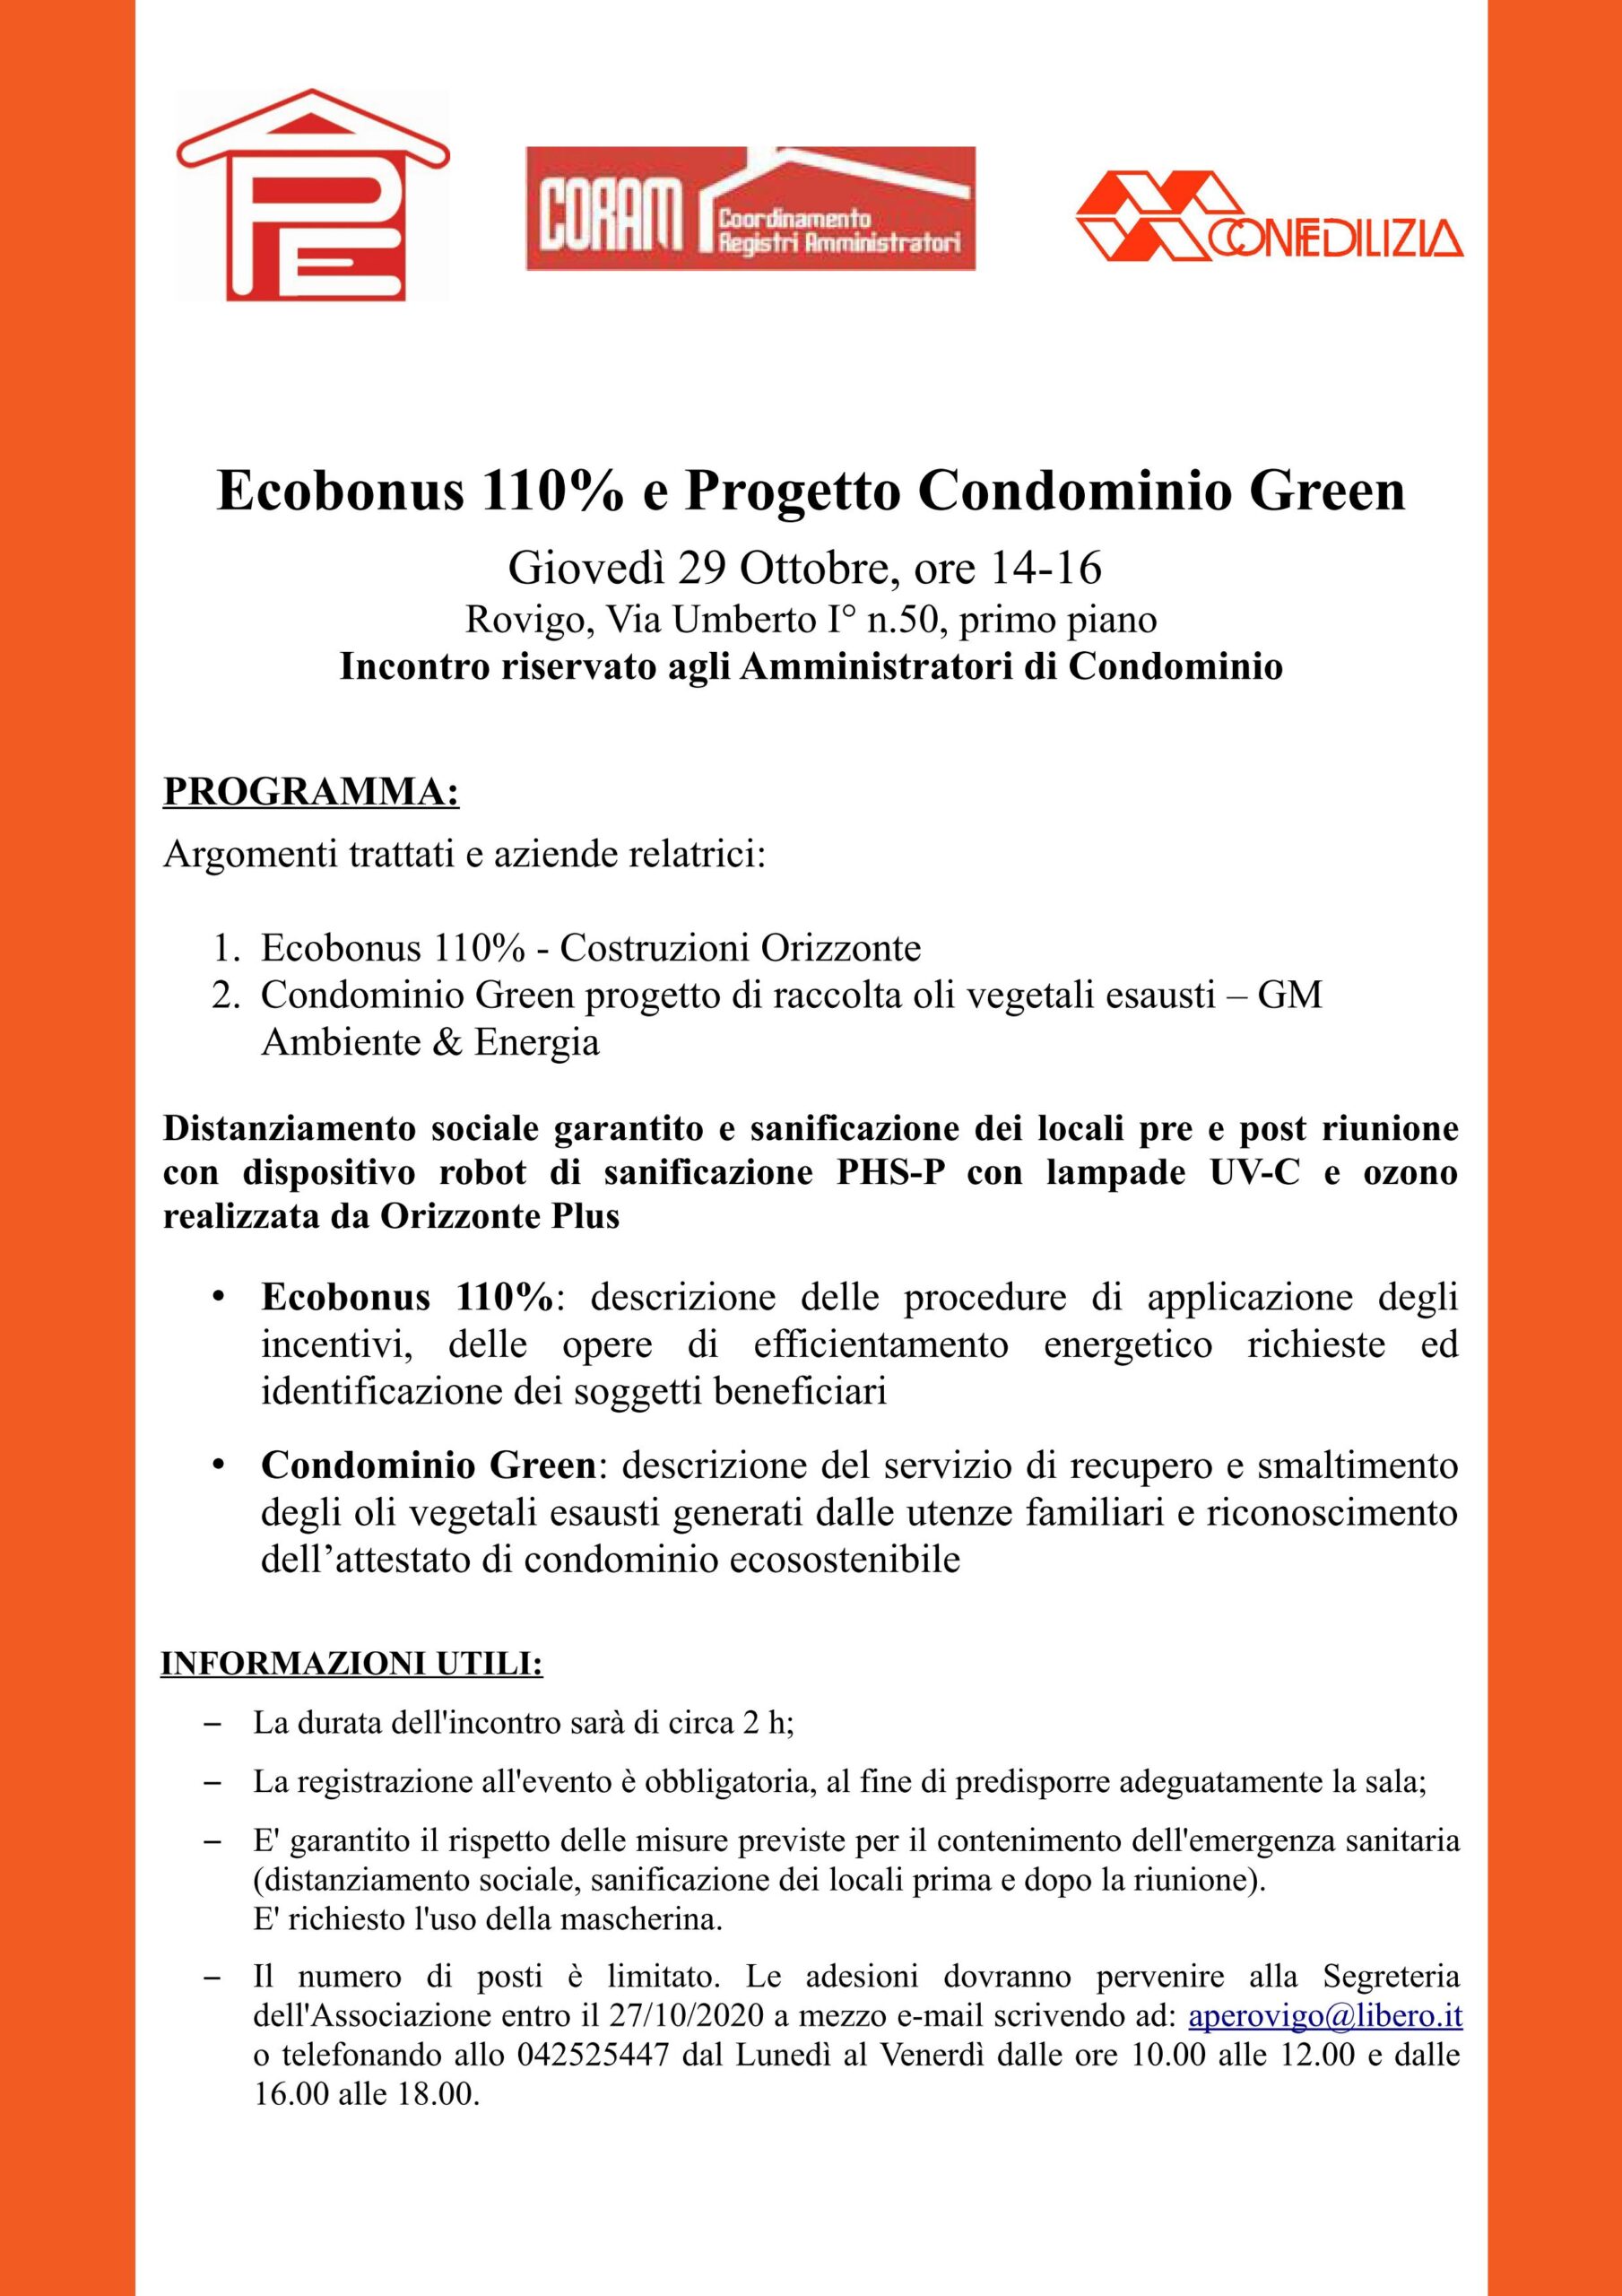 locandina-ecobonus-110-condominio-green-rovigo-ottobre-2020